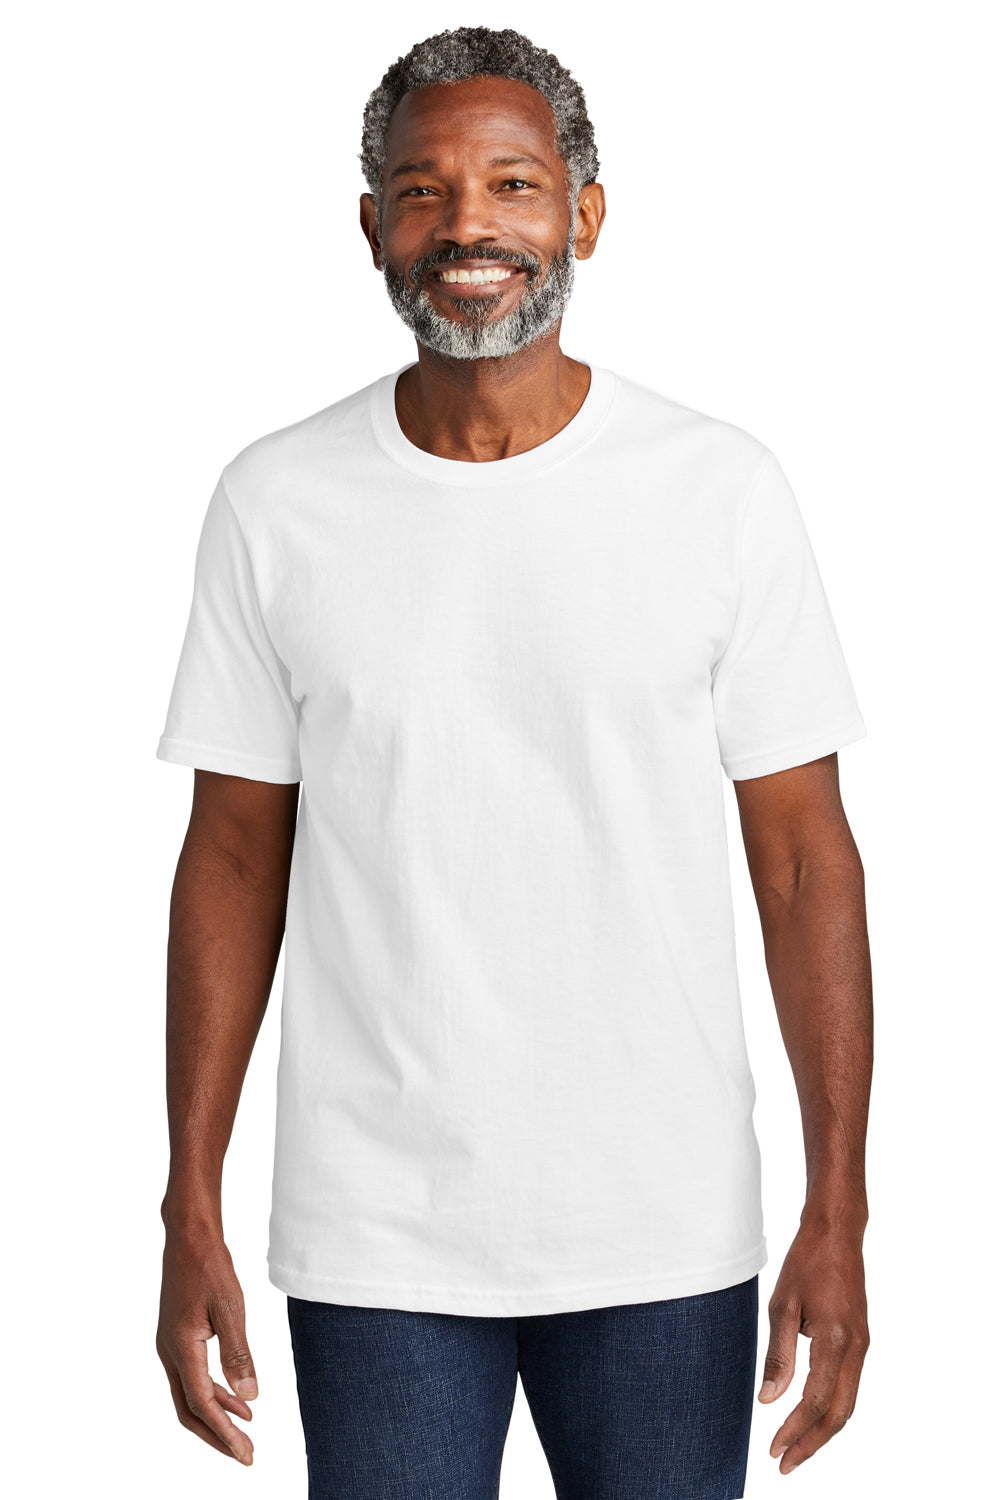 Volunteer Knitwear VL60 Chore Short Sleeve Crewneck T-Shirt White Front